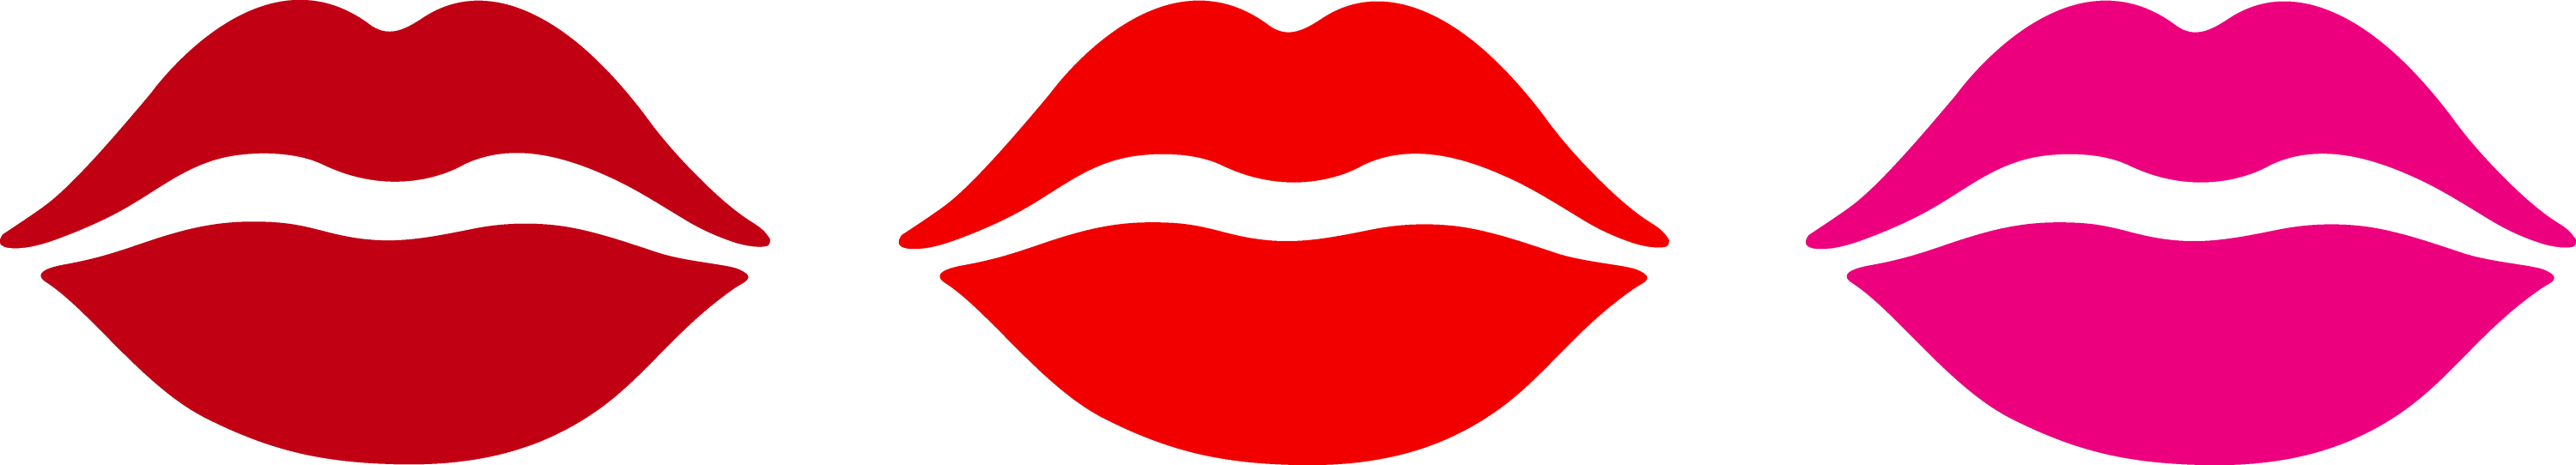 lips clip art free kiss - photo #10